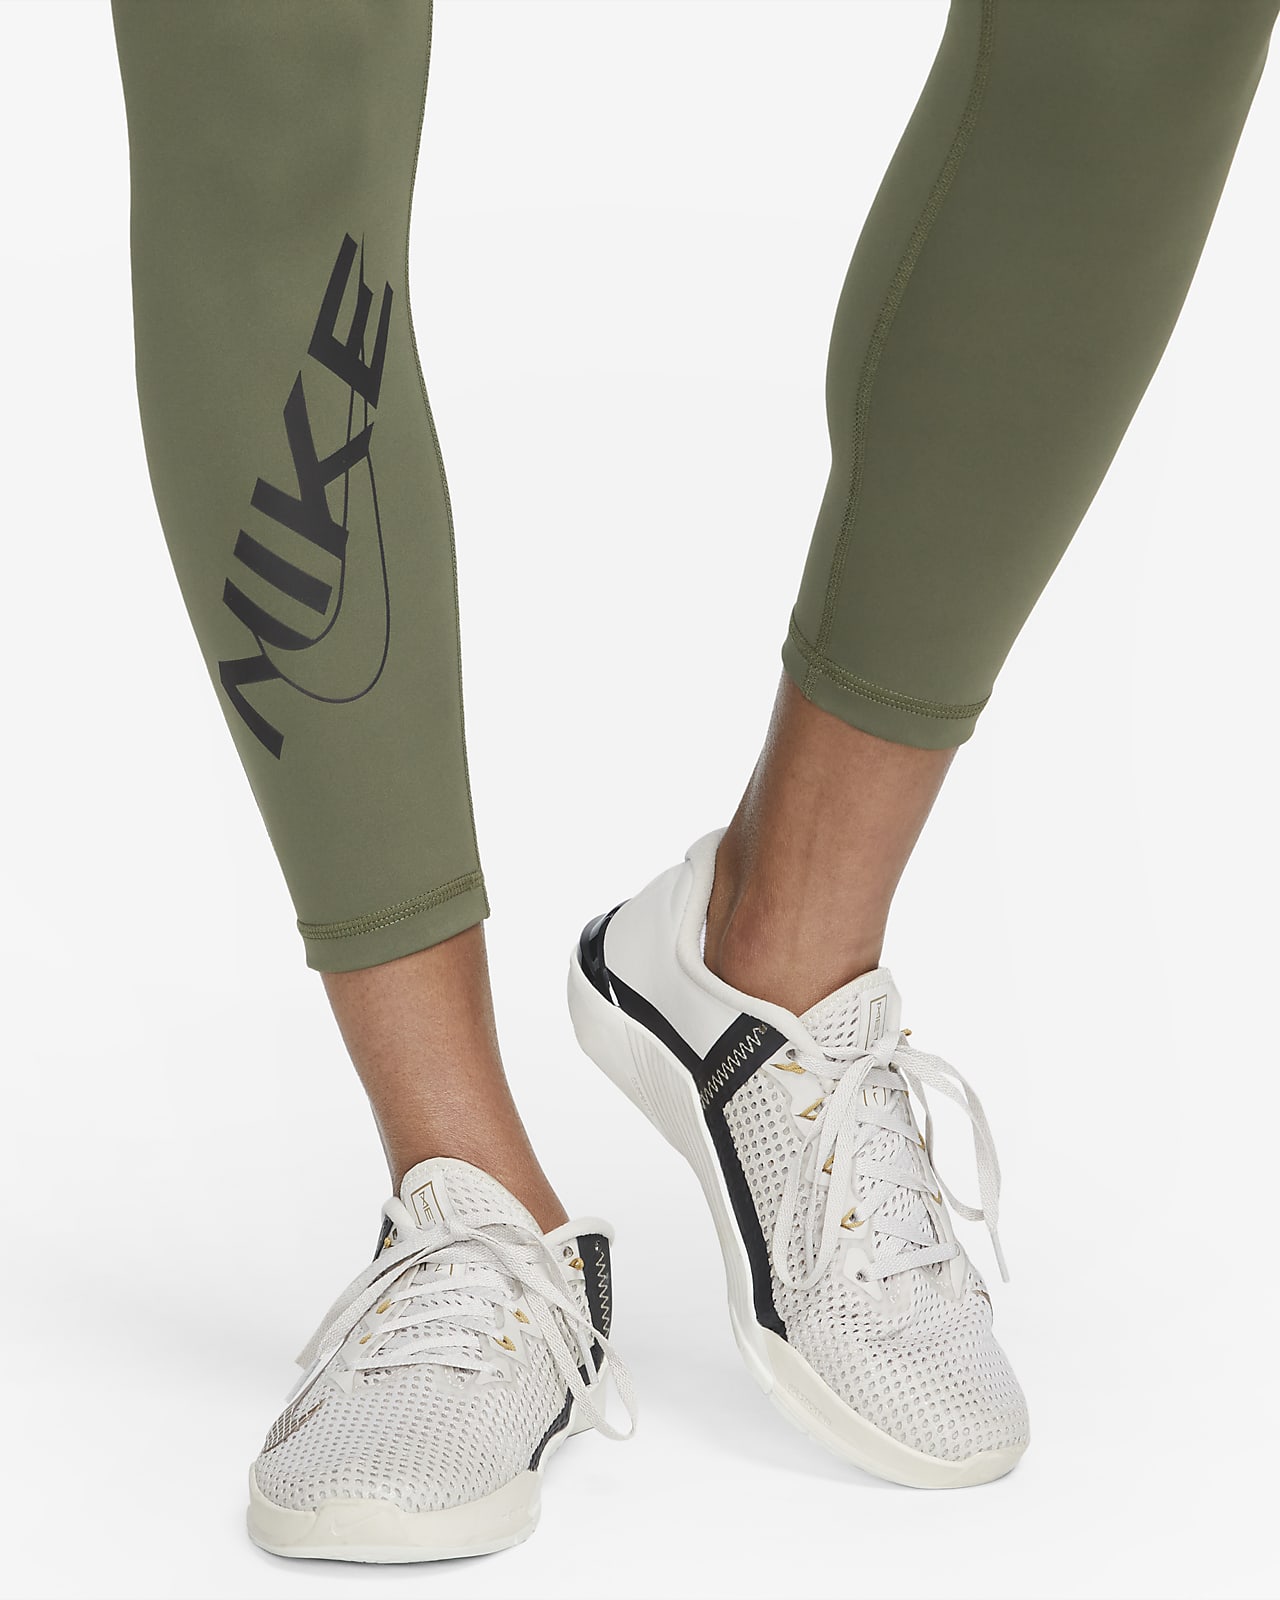 Nike Womens Pro Dri-FIT Mid-Rise Print Leggings- Medium Olive/Black, Pro:Direct  Running